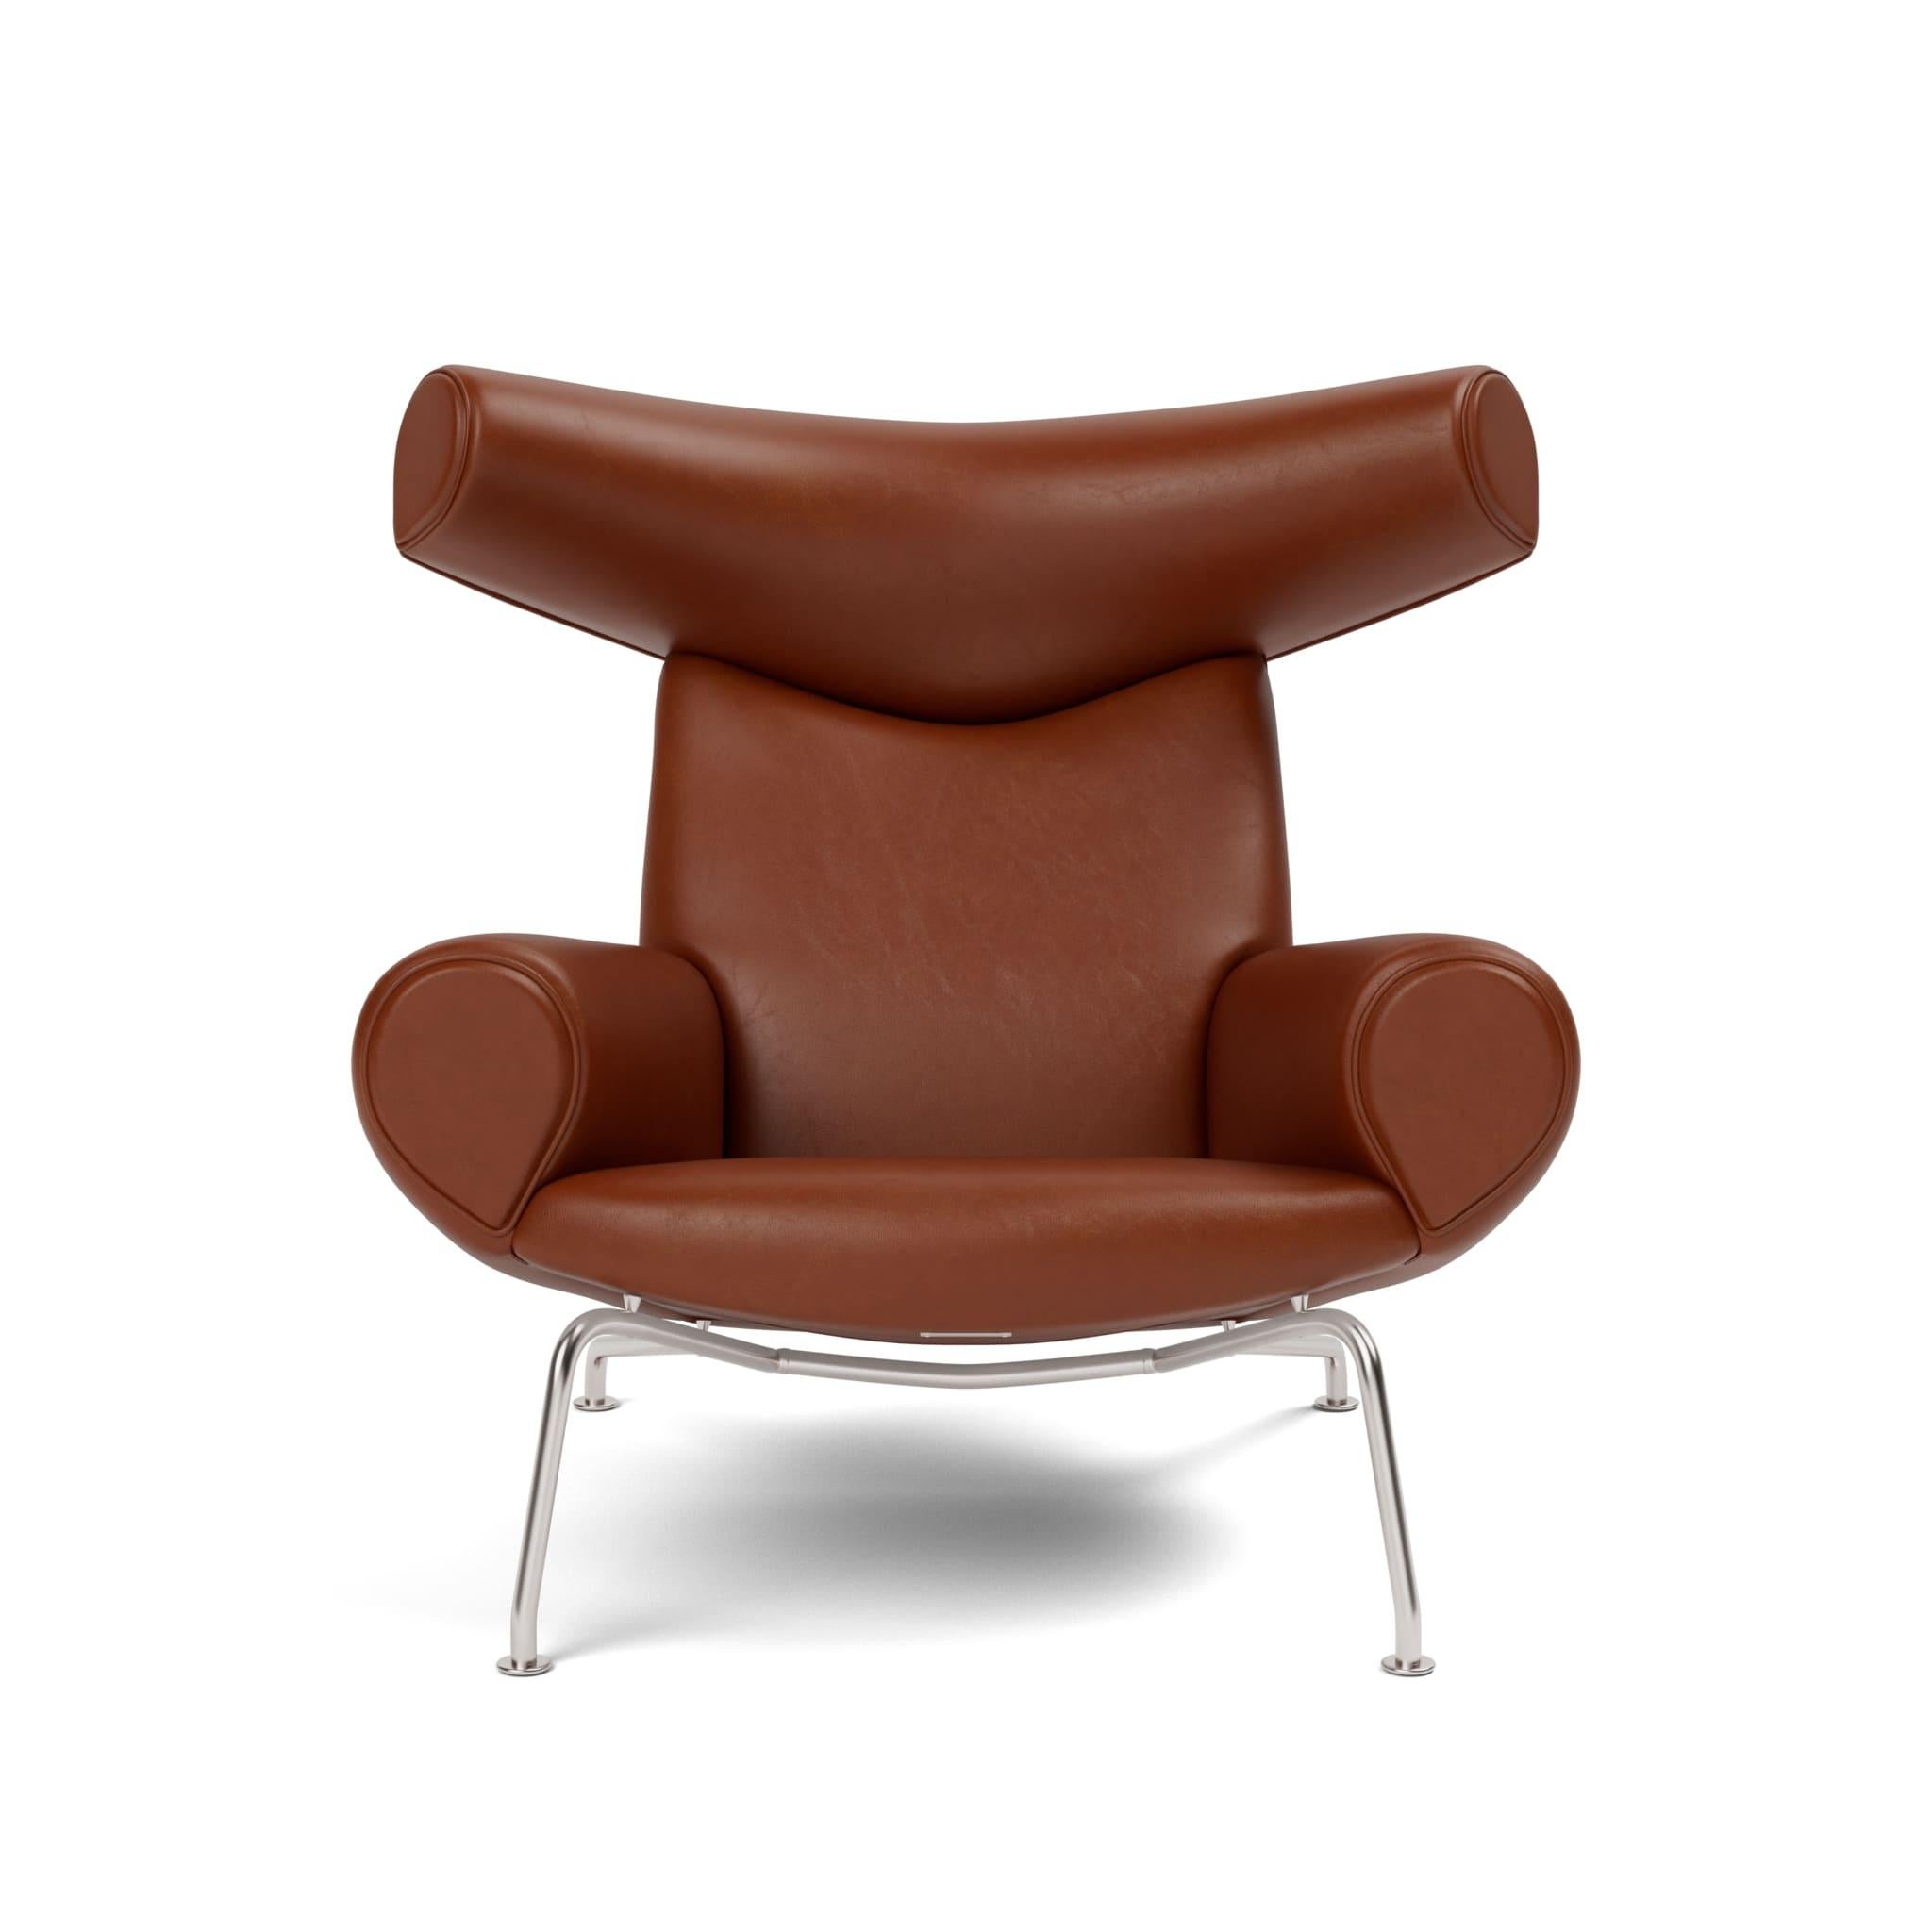 Scandinavian Modern Wegner Ox Chair-Russet Brown/Brushed Stainless Steel-by HansJ. Wegner Fredericia For Sale